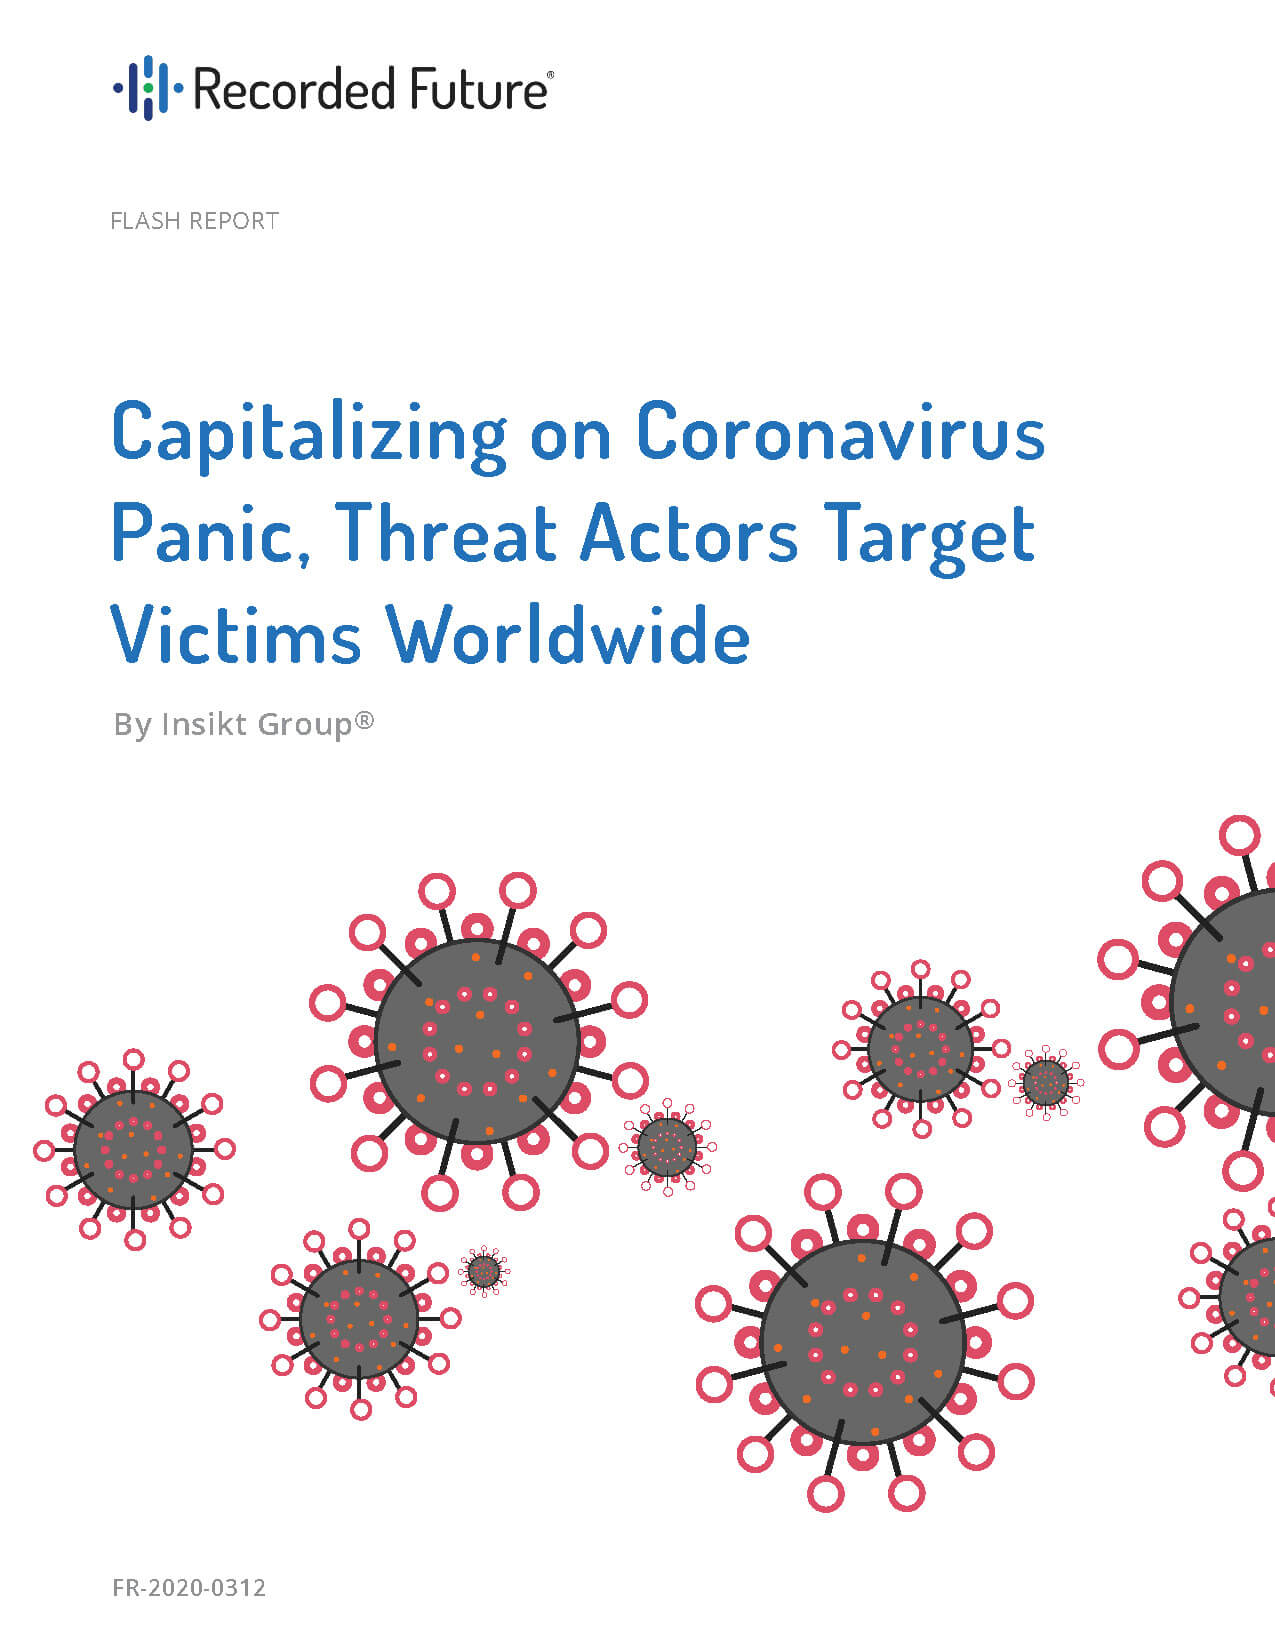 Capitalizing on Coronavirus Panic, Threat Actors Target Victims Worldwide Report